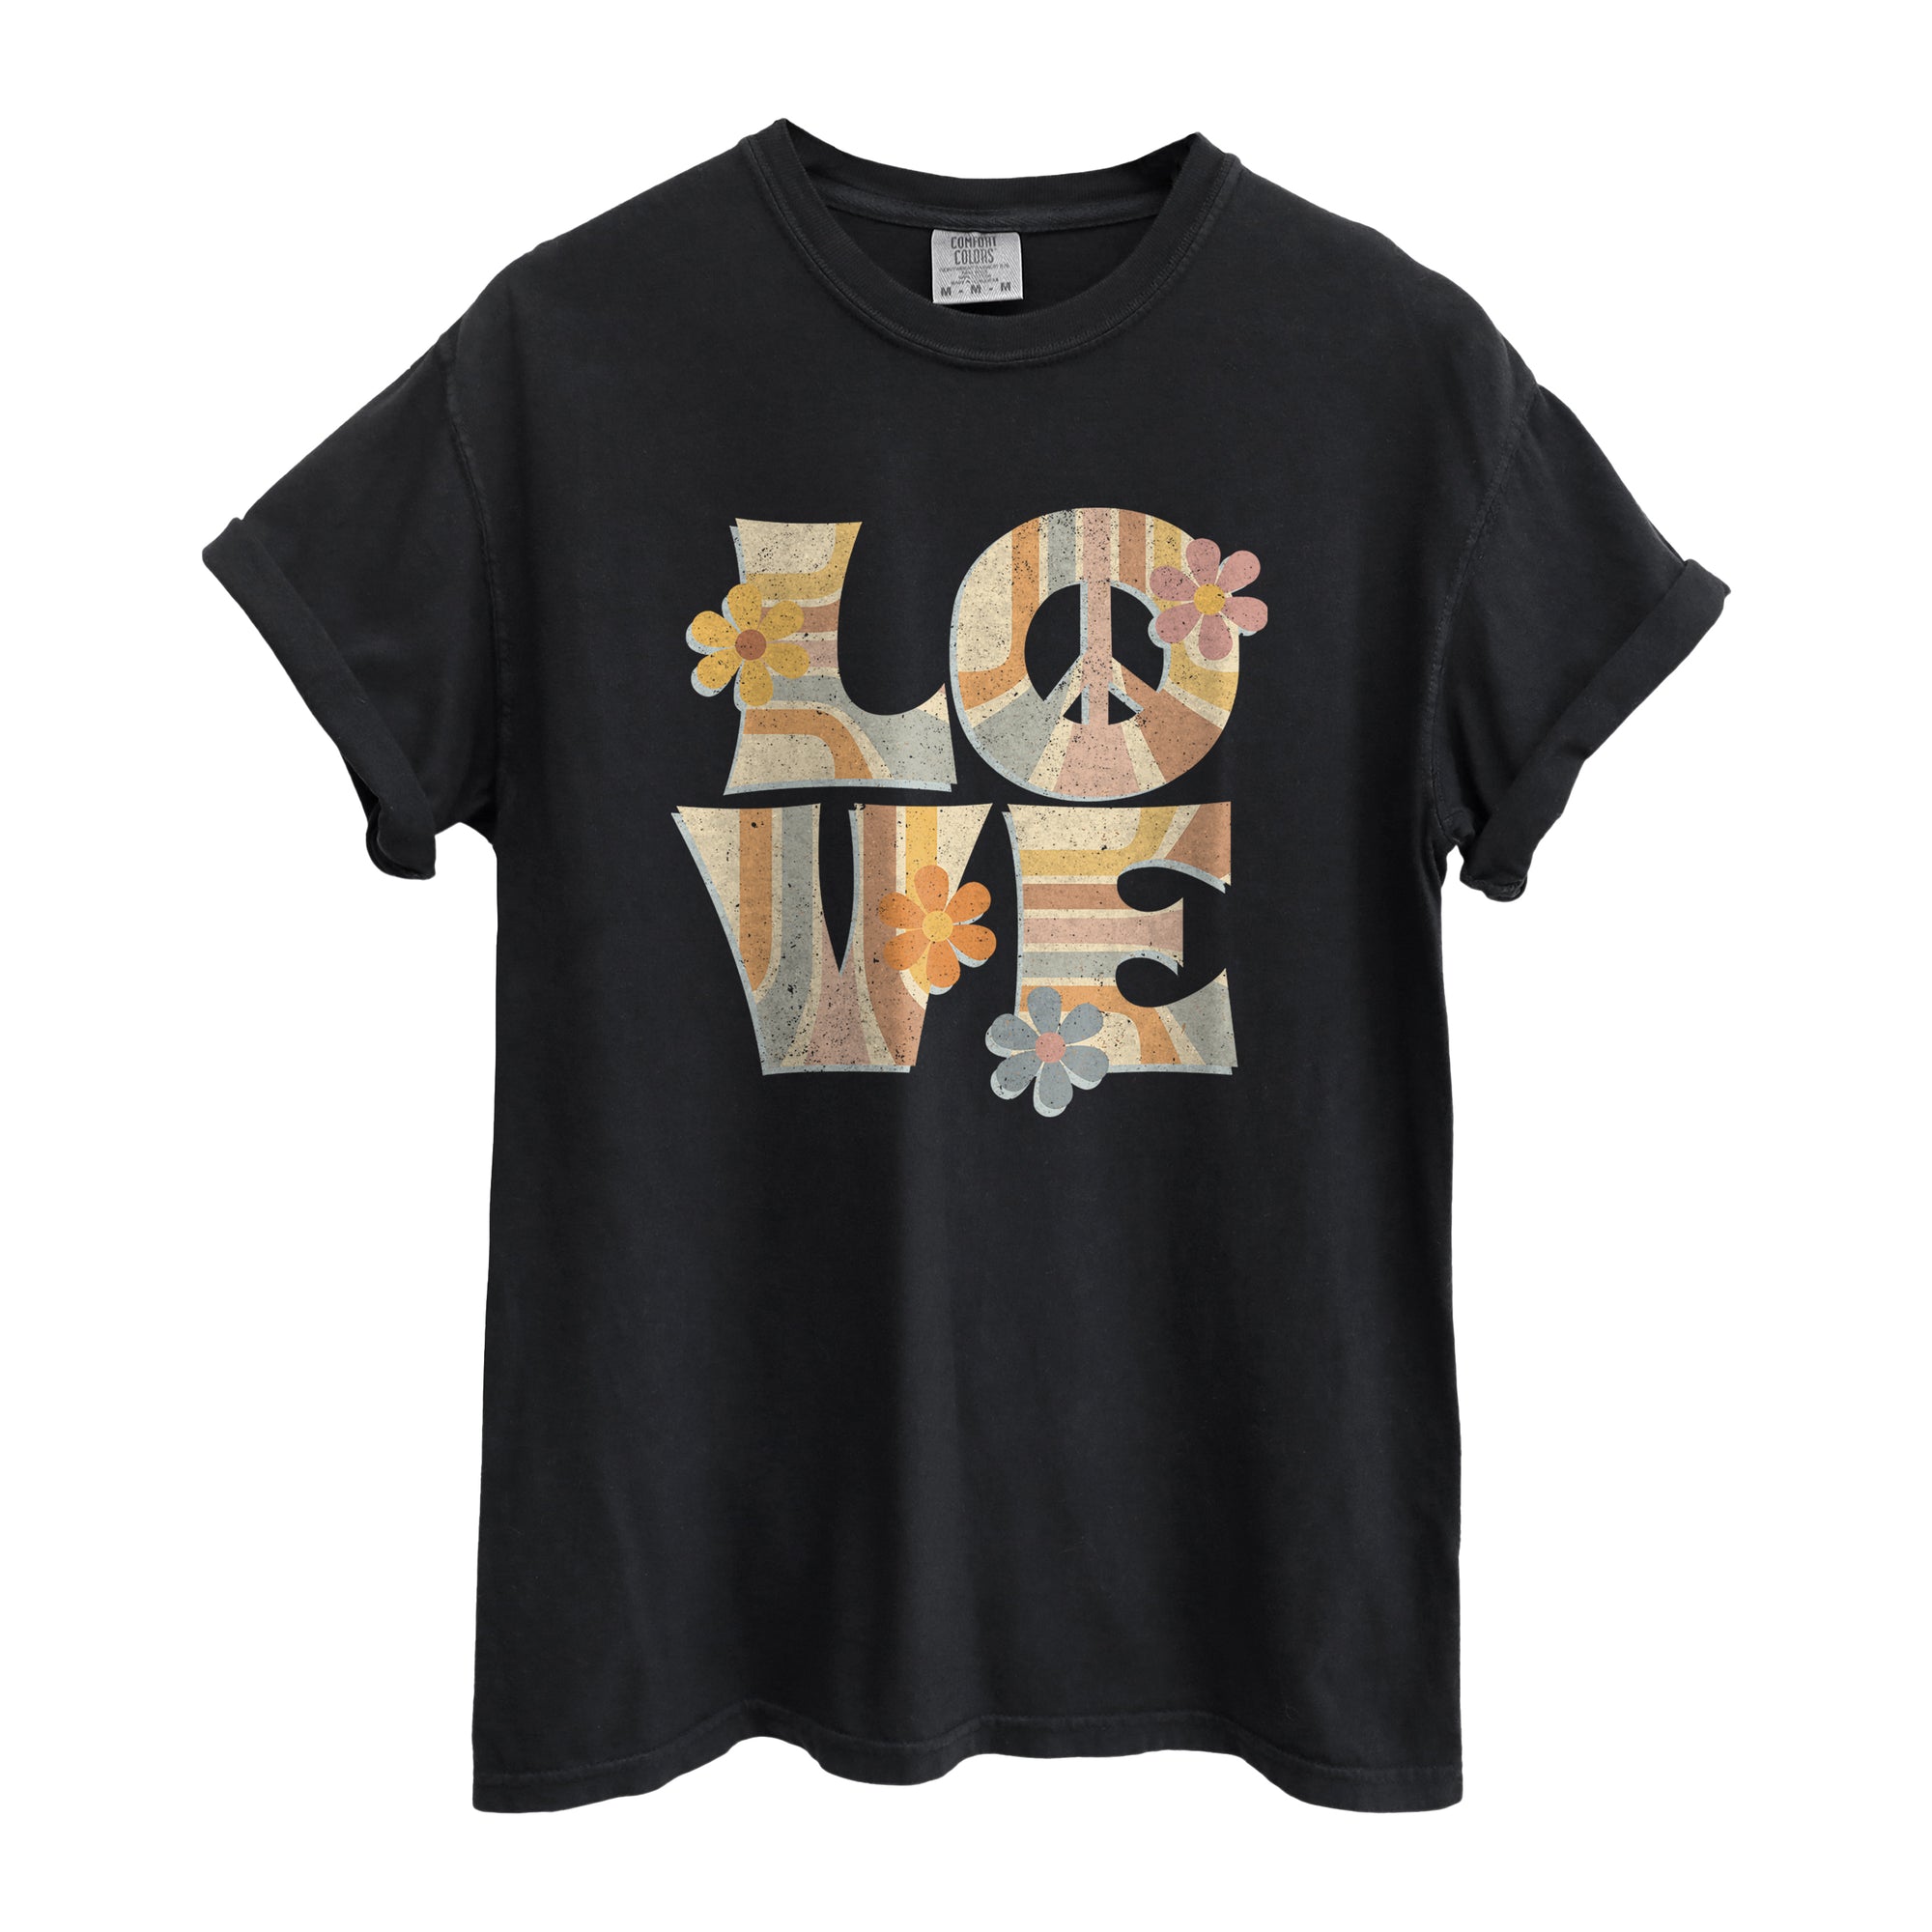 Retro Love Oversized Shirt Garment-Dyed Graphic Tee